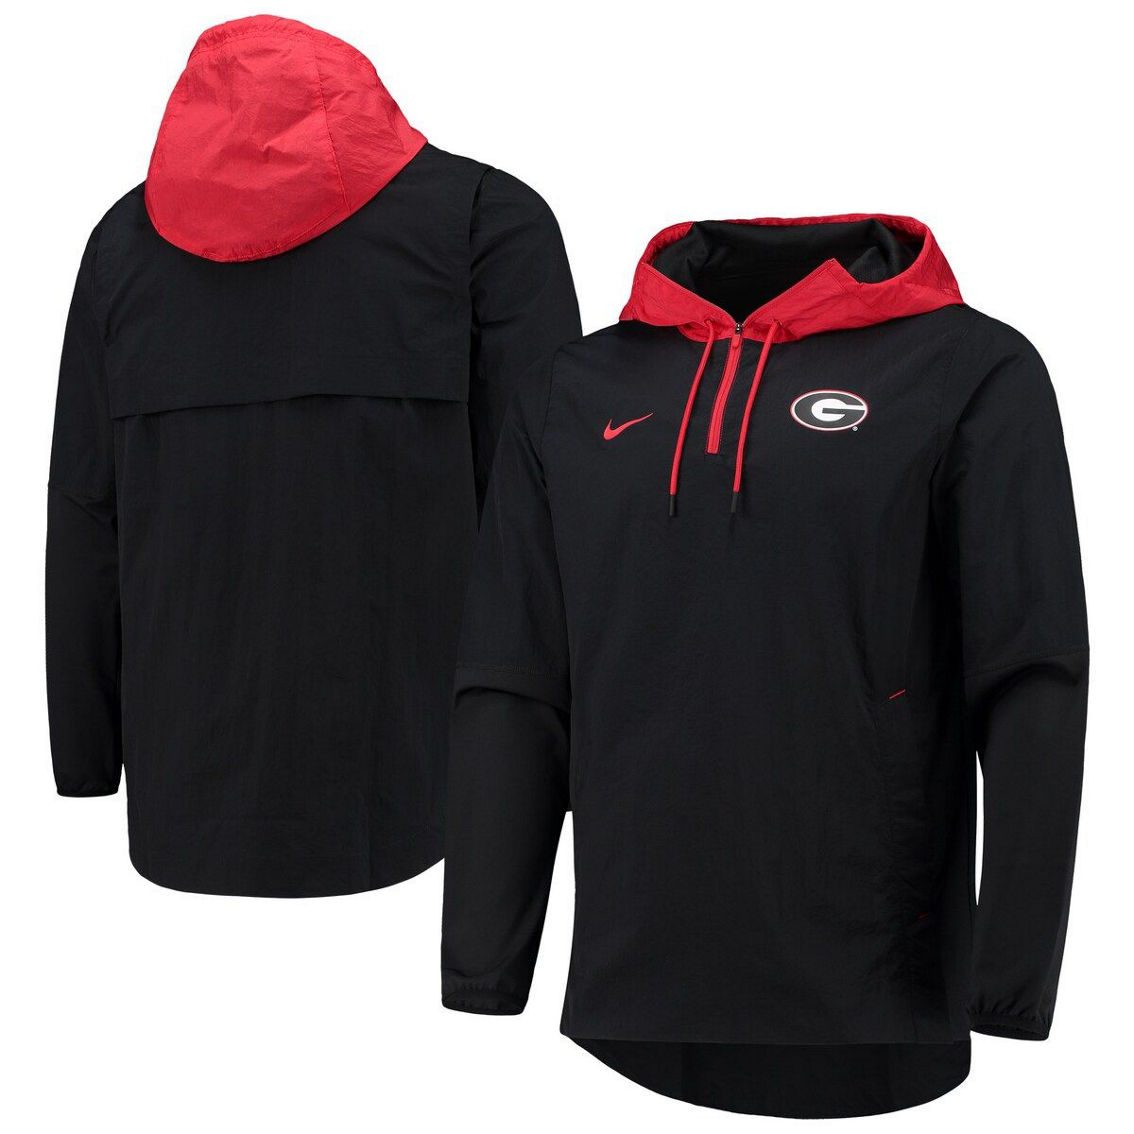 Nike Men's Black/Red Georgia Bulldogs Player Quarter-Zip Jacket - Image 2 of 4